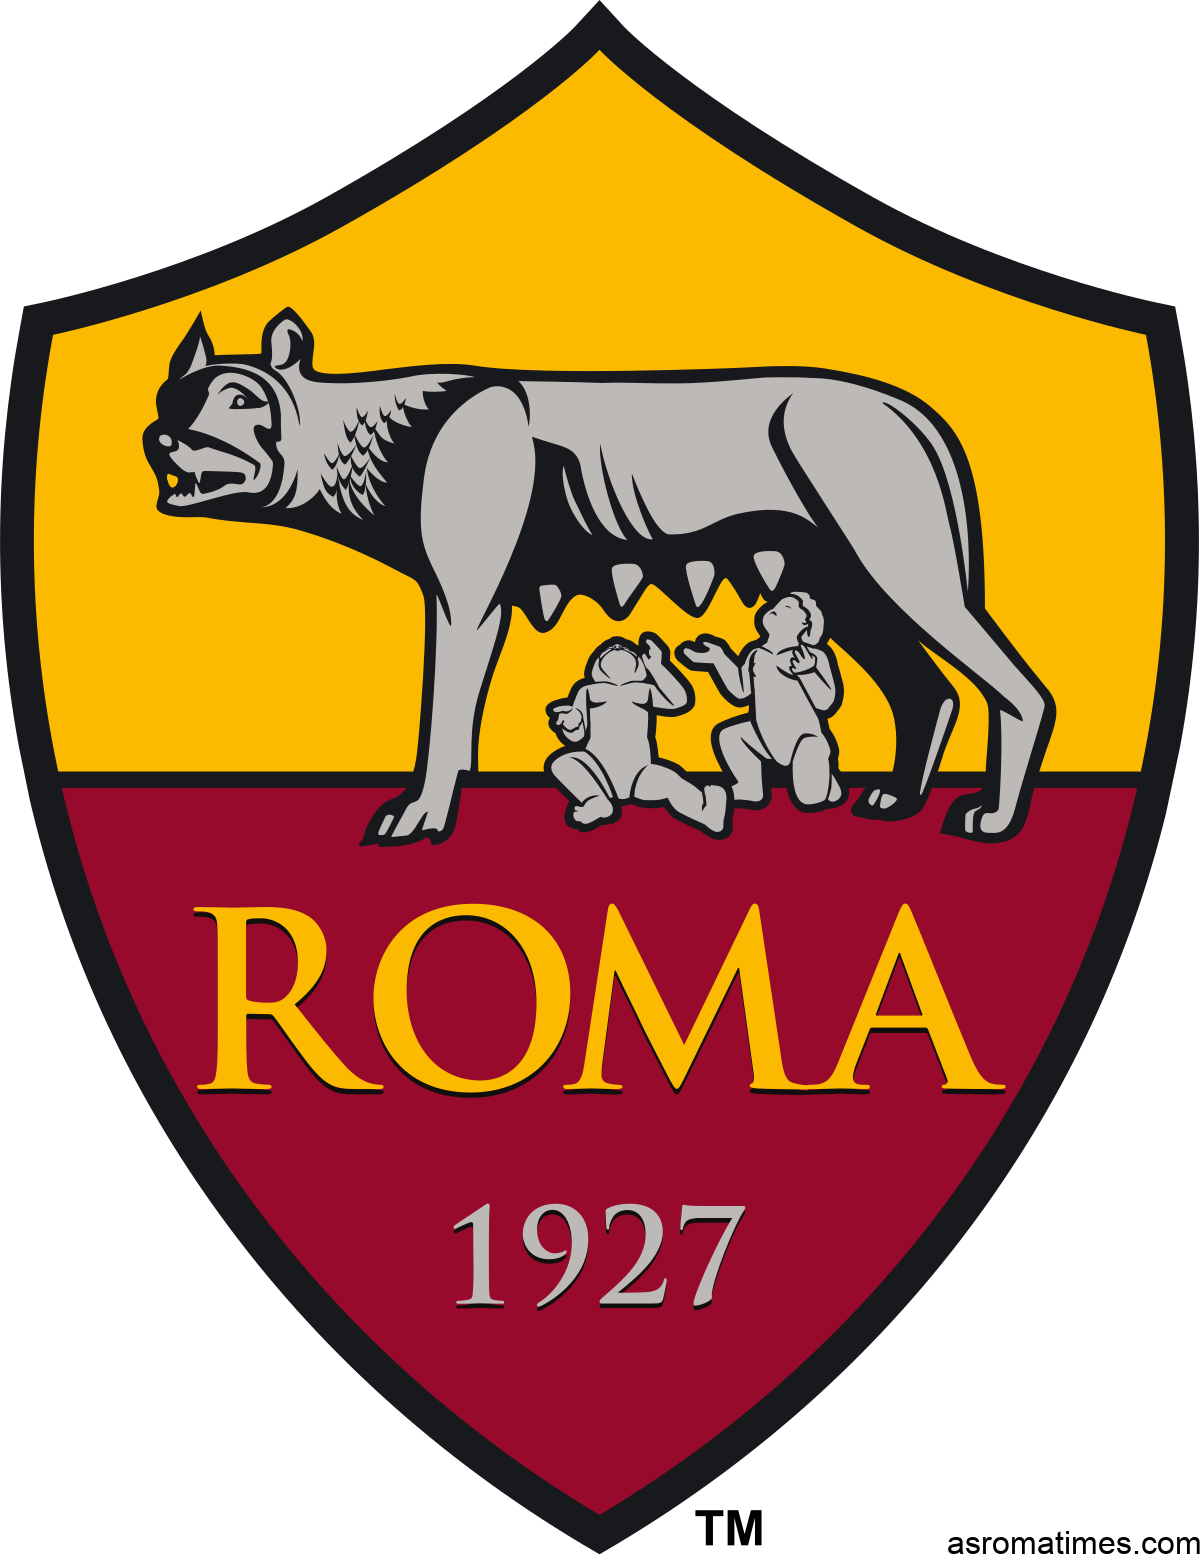 The history of As Roma logo